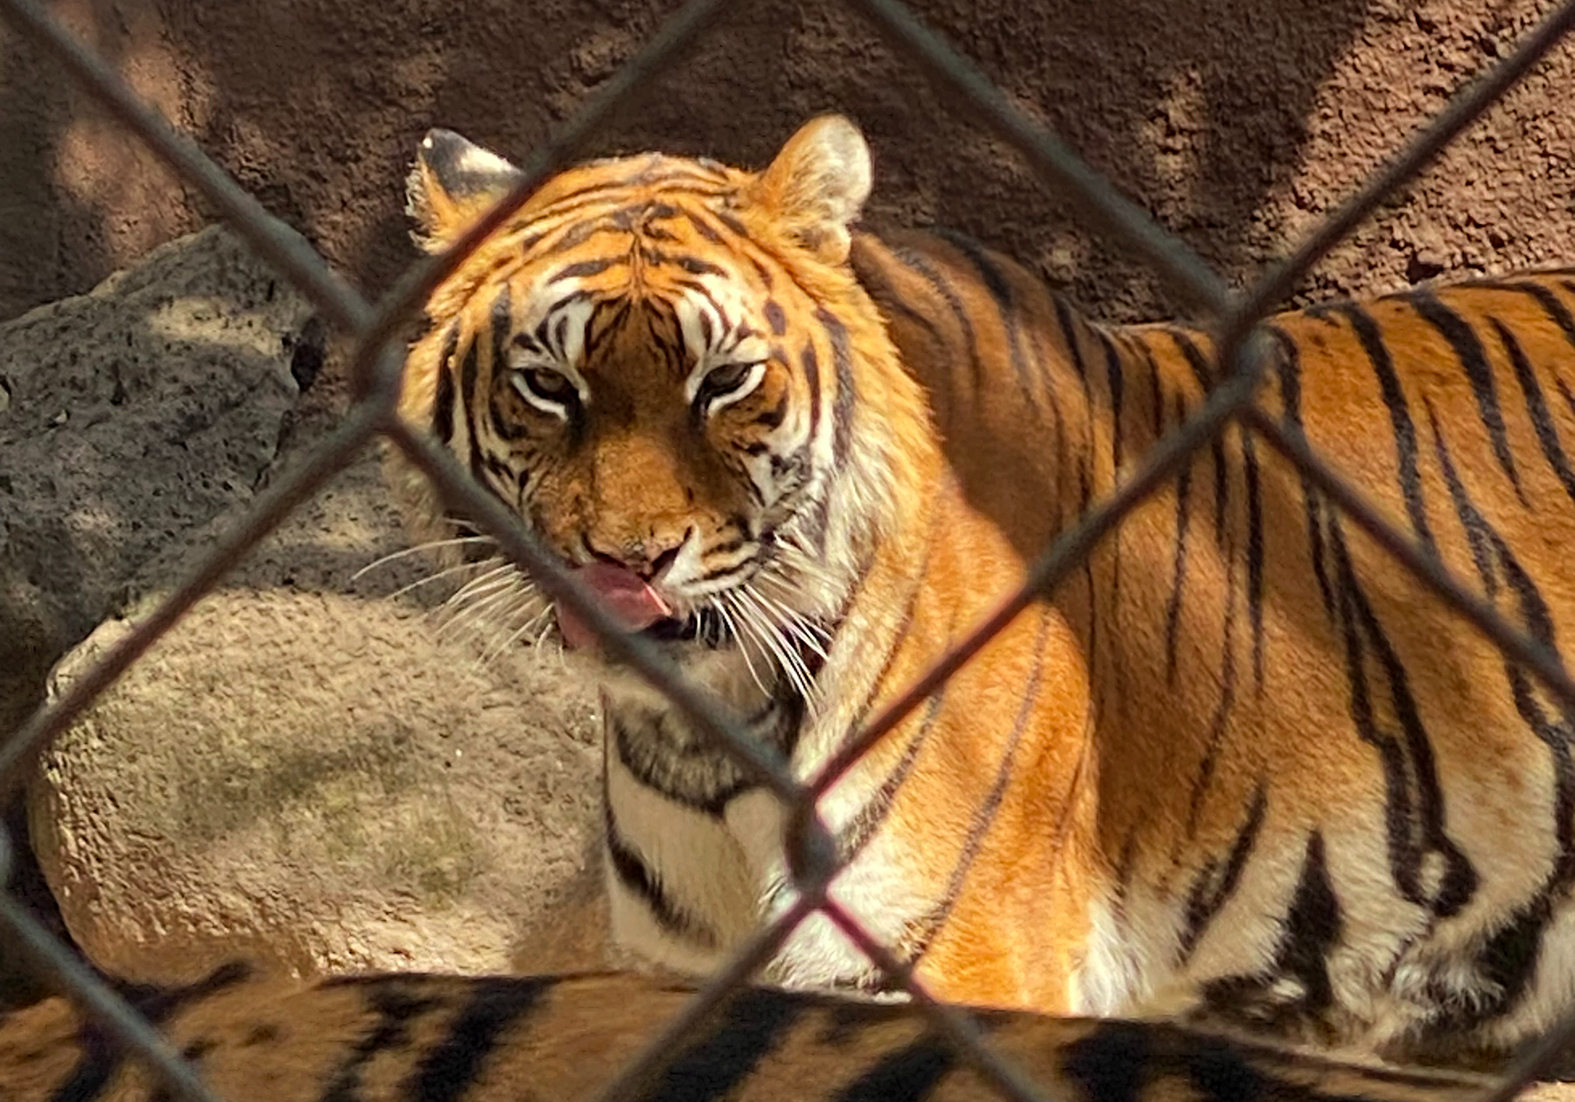 Asociación mexicana dona 200 tigres a la India para evitar su extinción